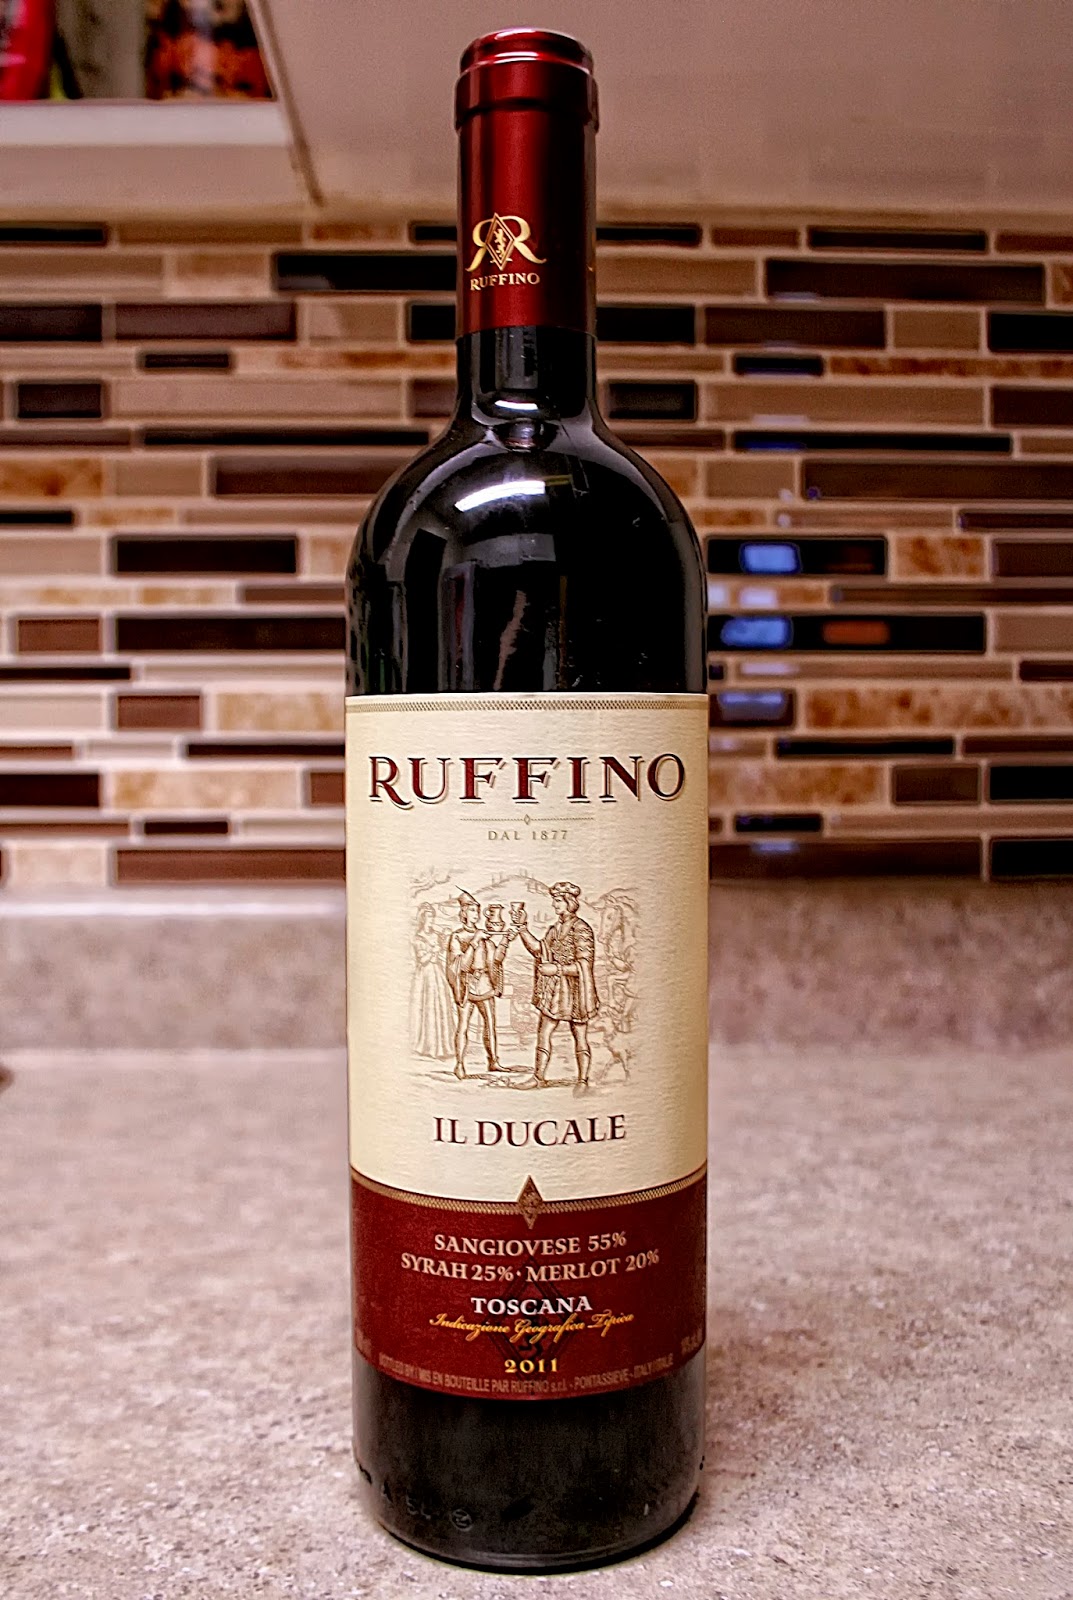 Rượu vang Ruffino Il Ducale